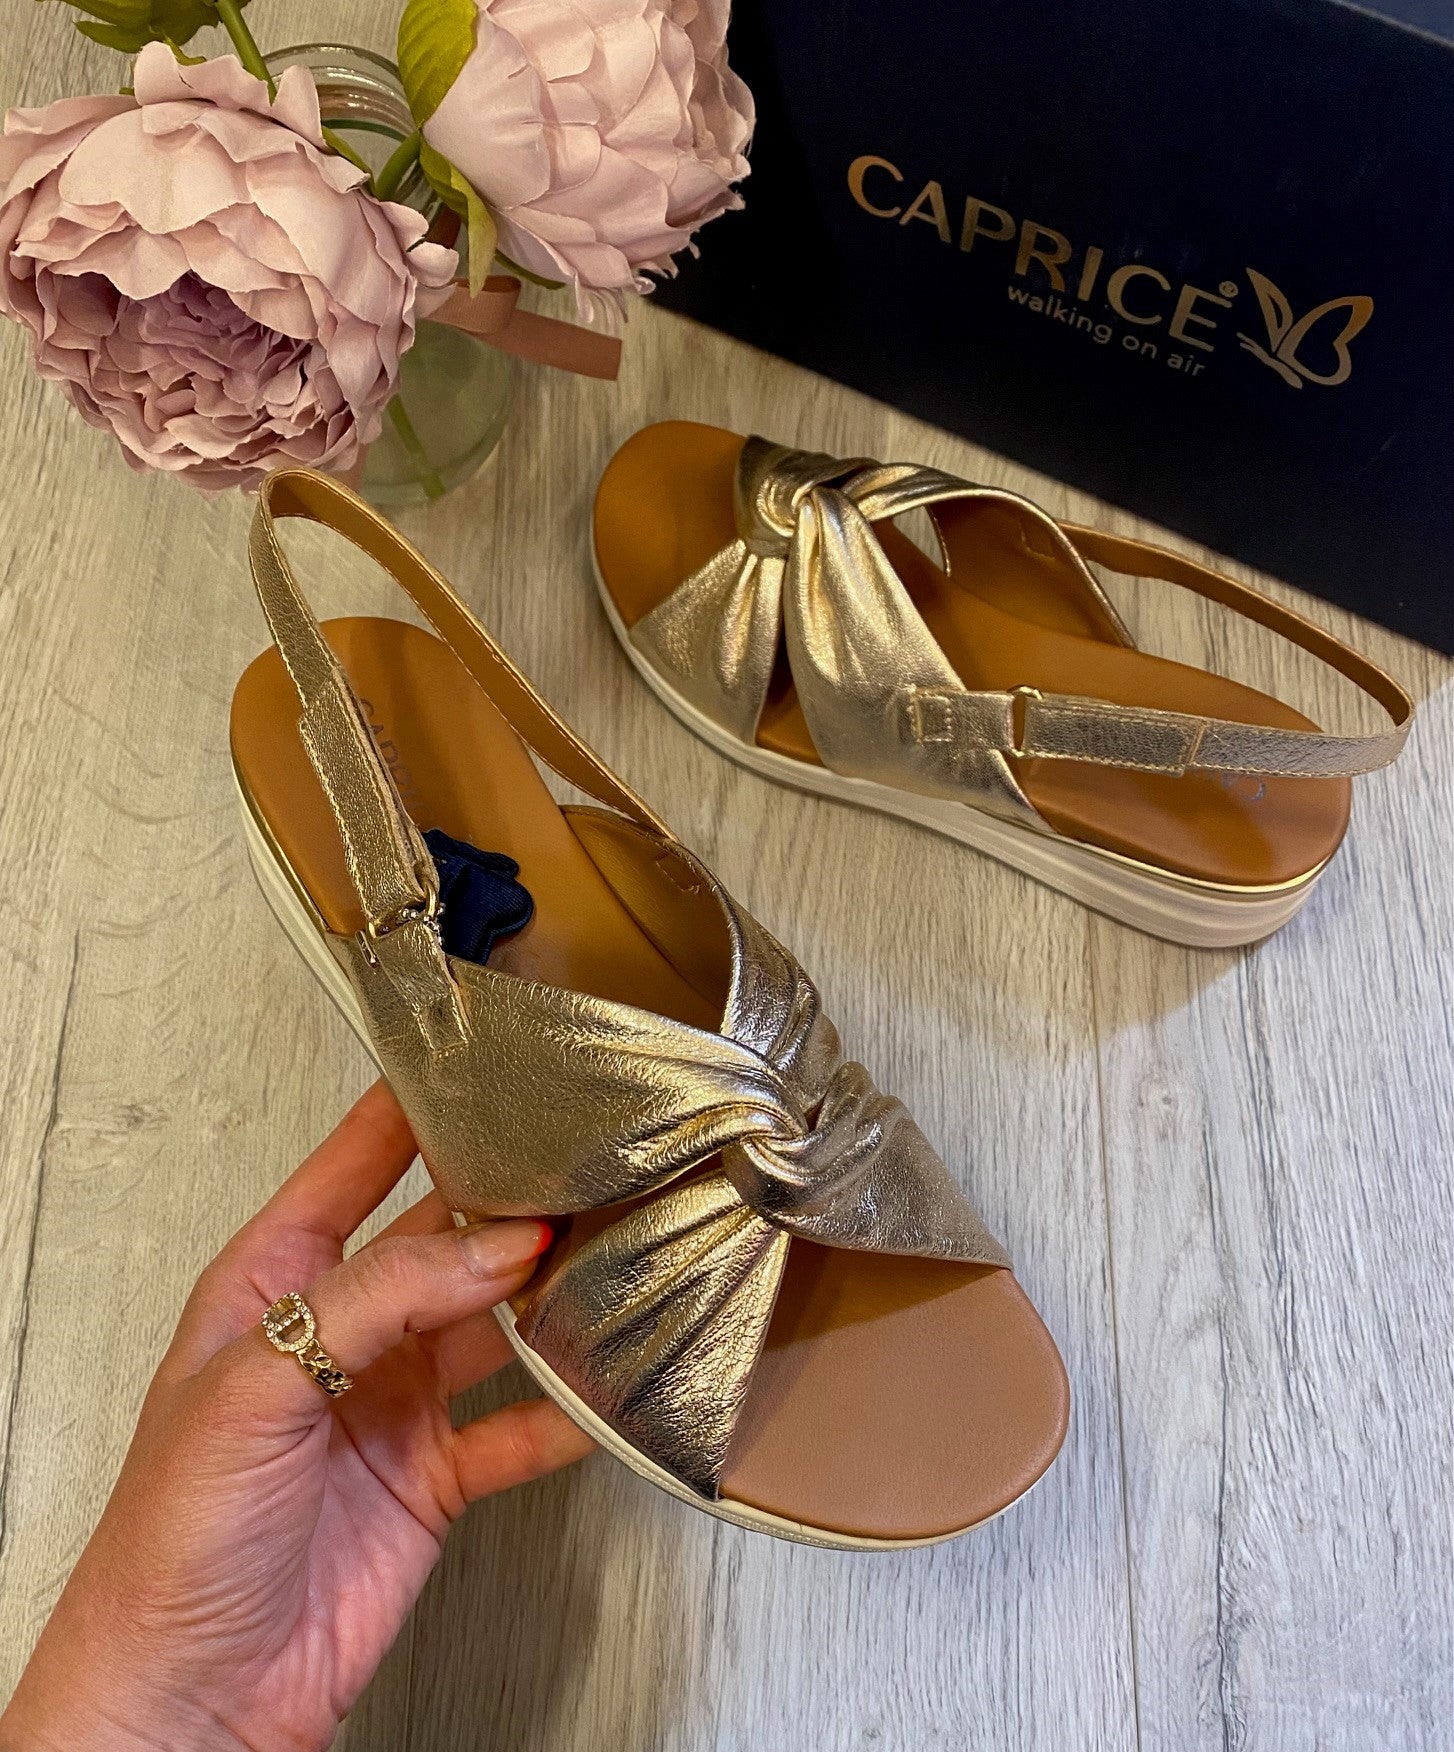 Caprice Flatform Sandals in Metallic Gold